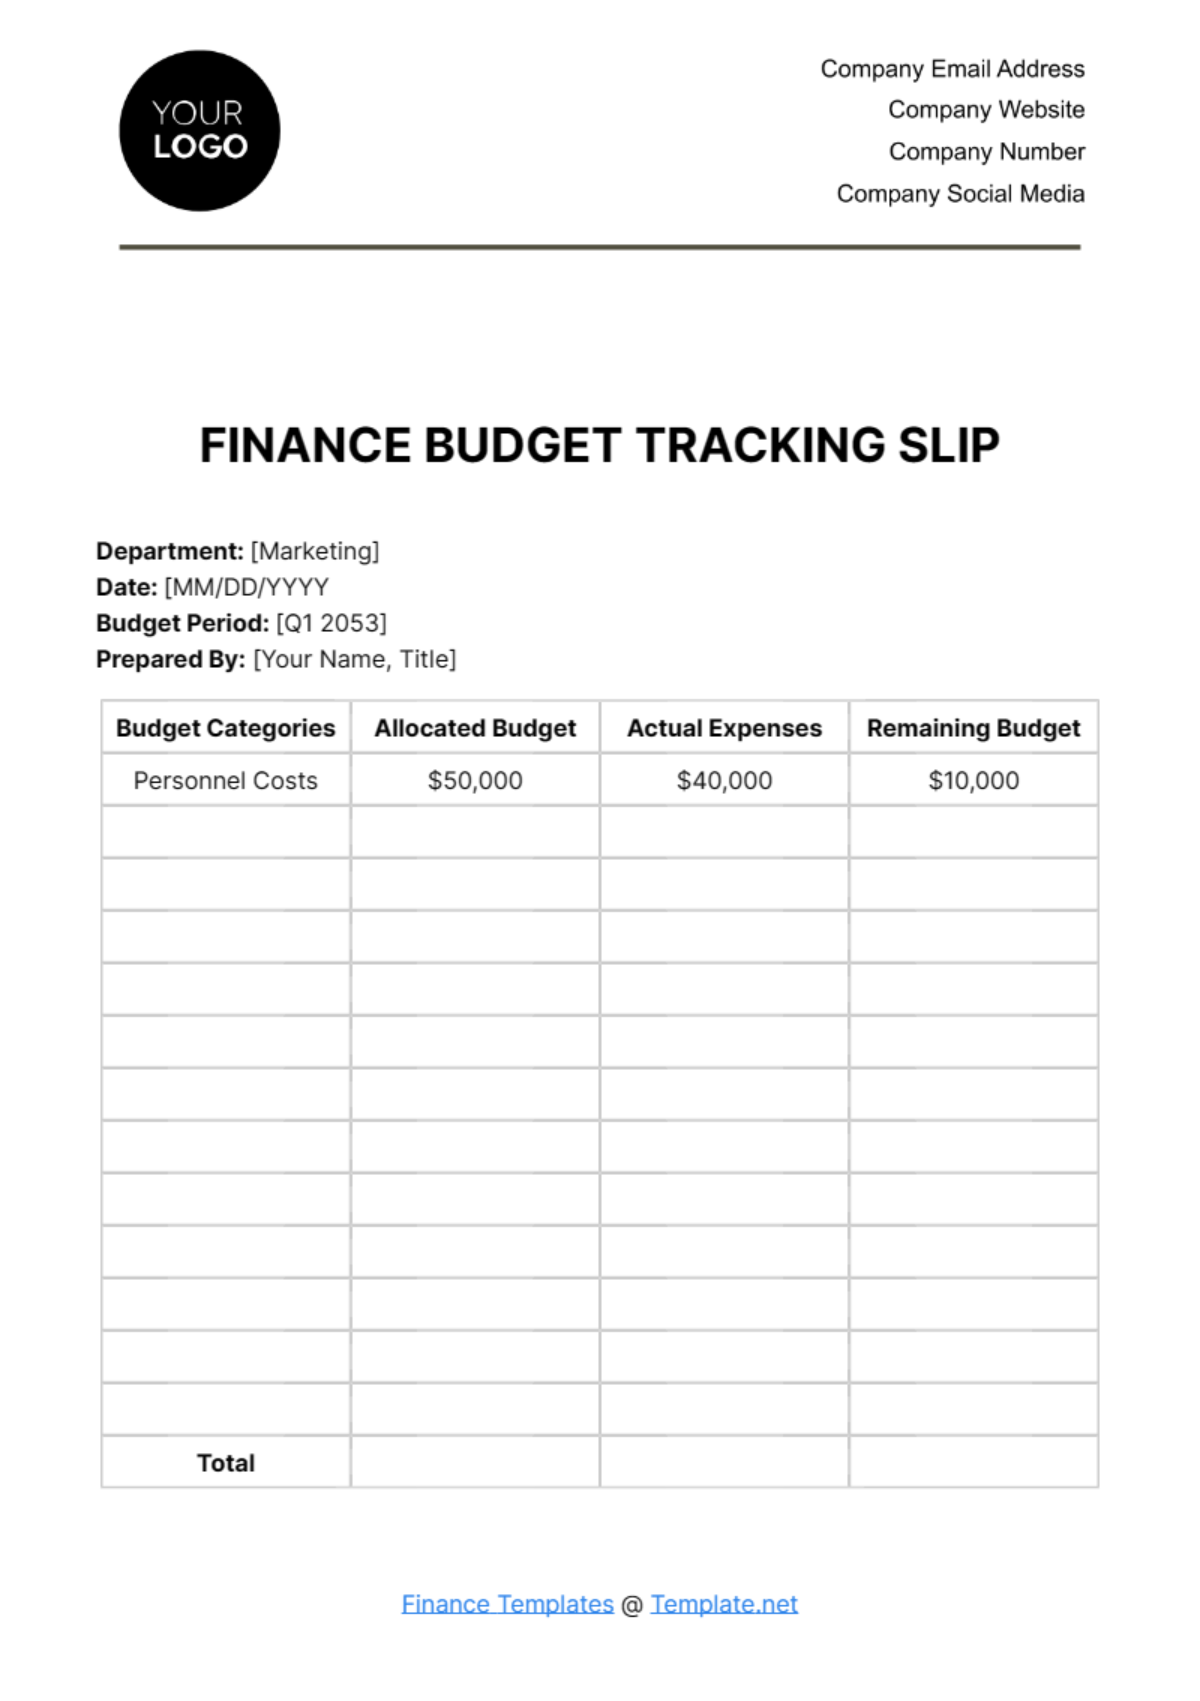 Finance Budget Tracking Slip Template